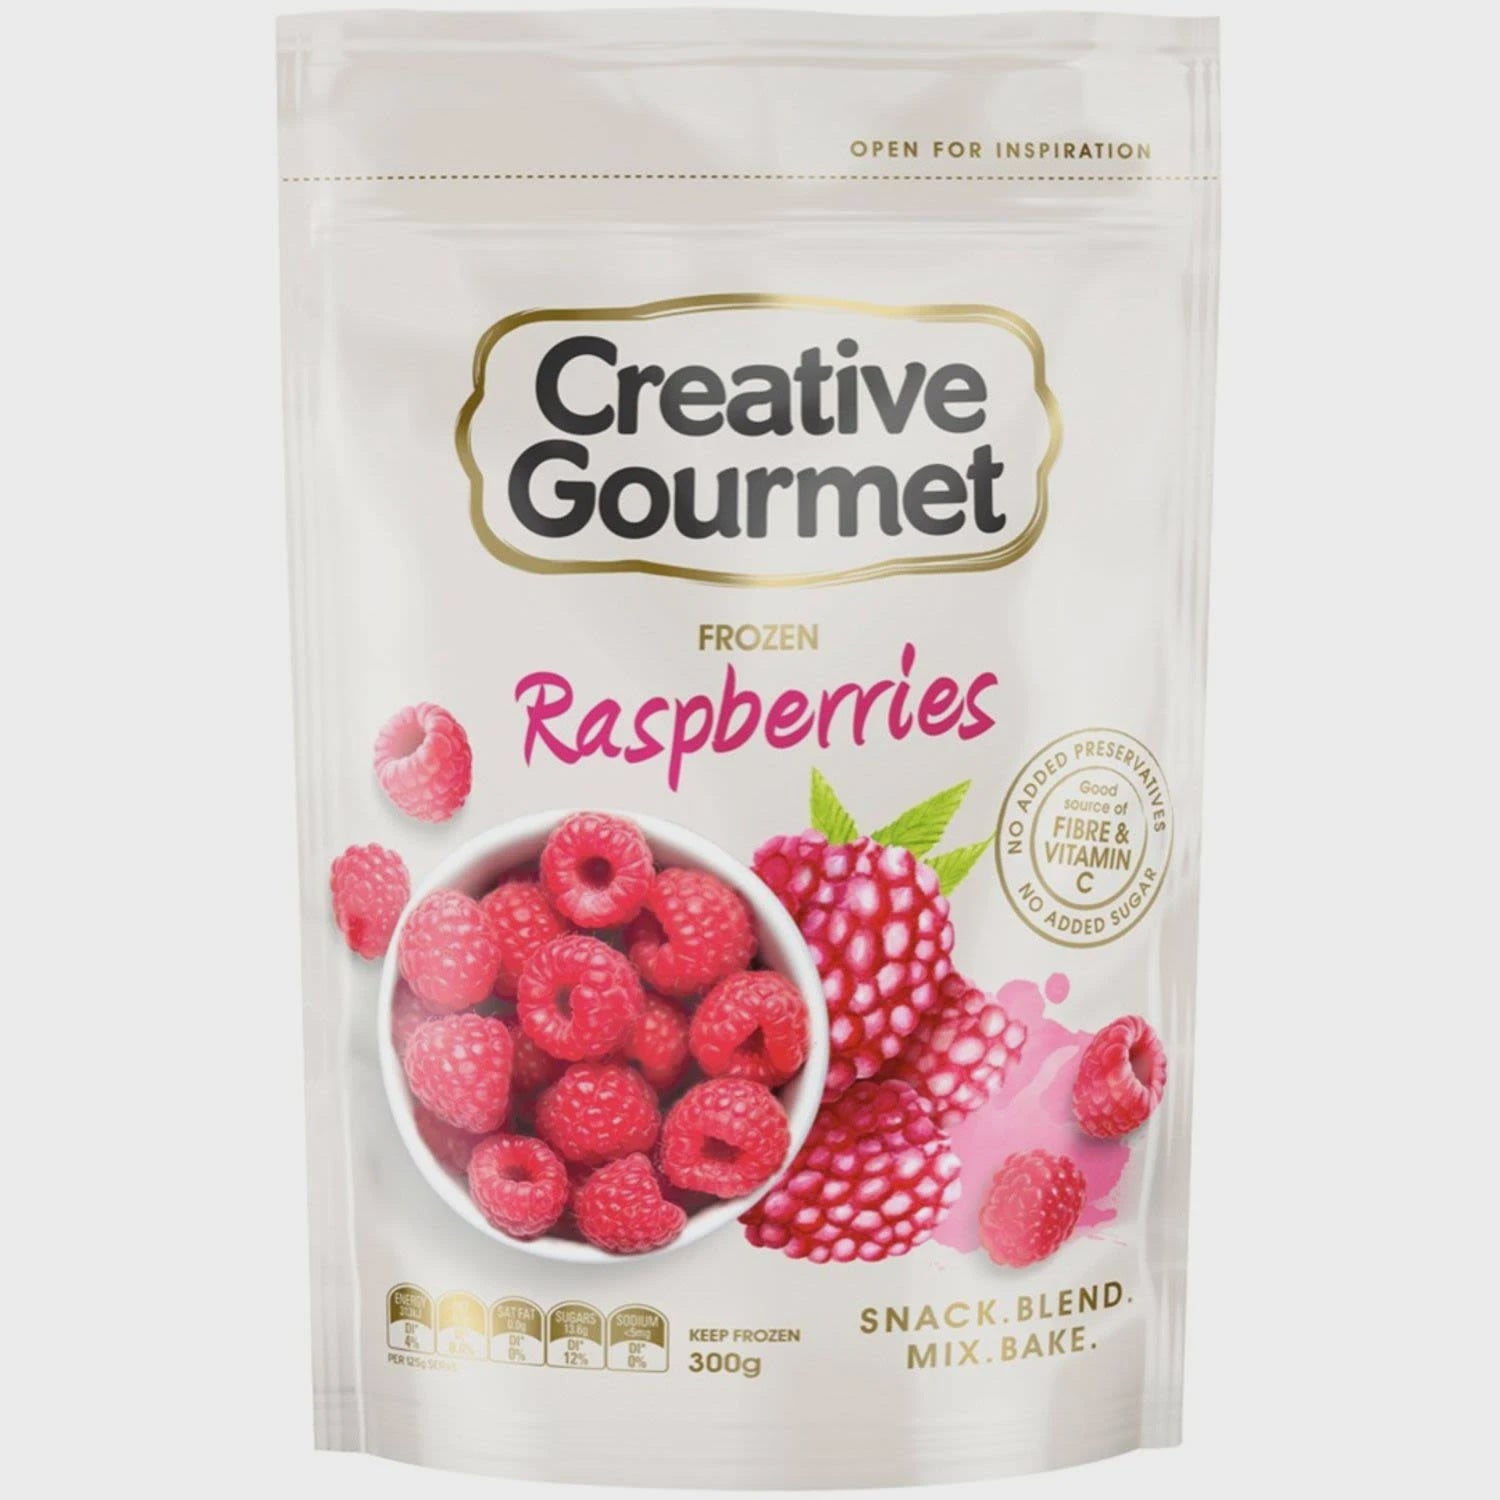 Creative Gourmet Raspberries 300g